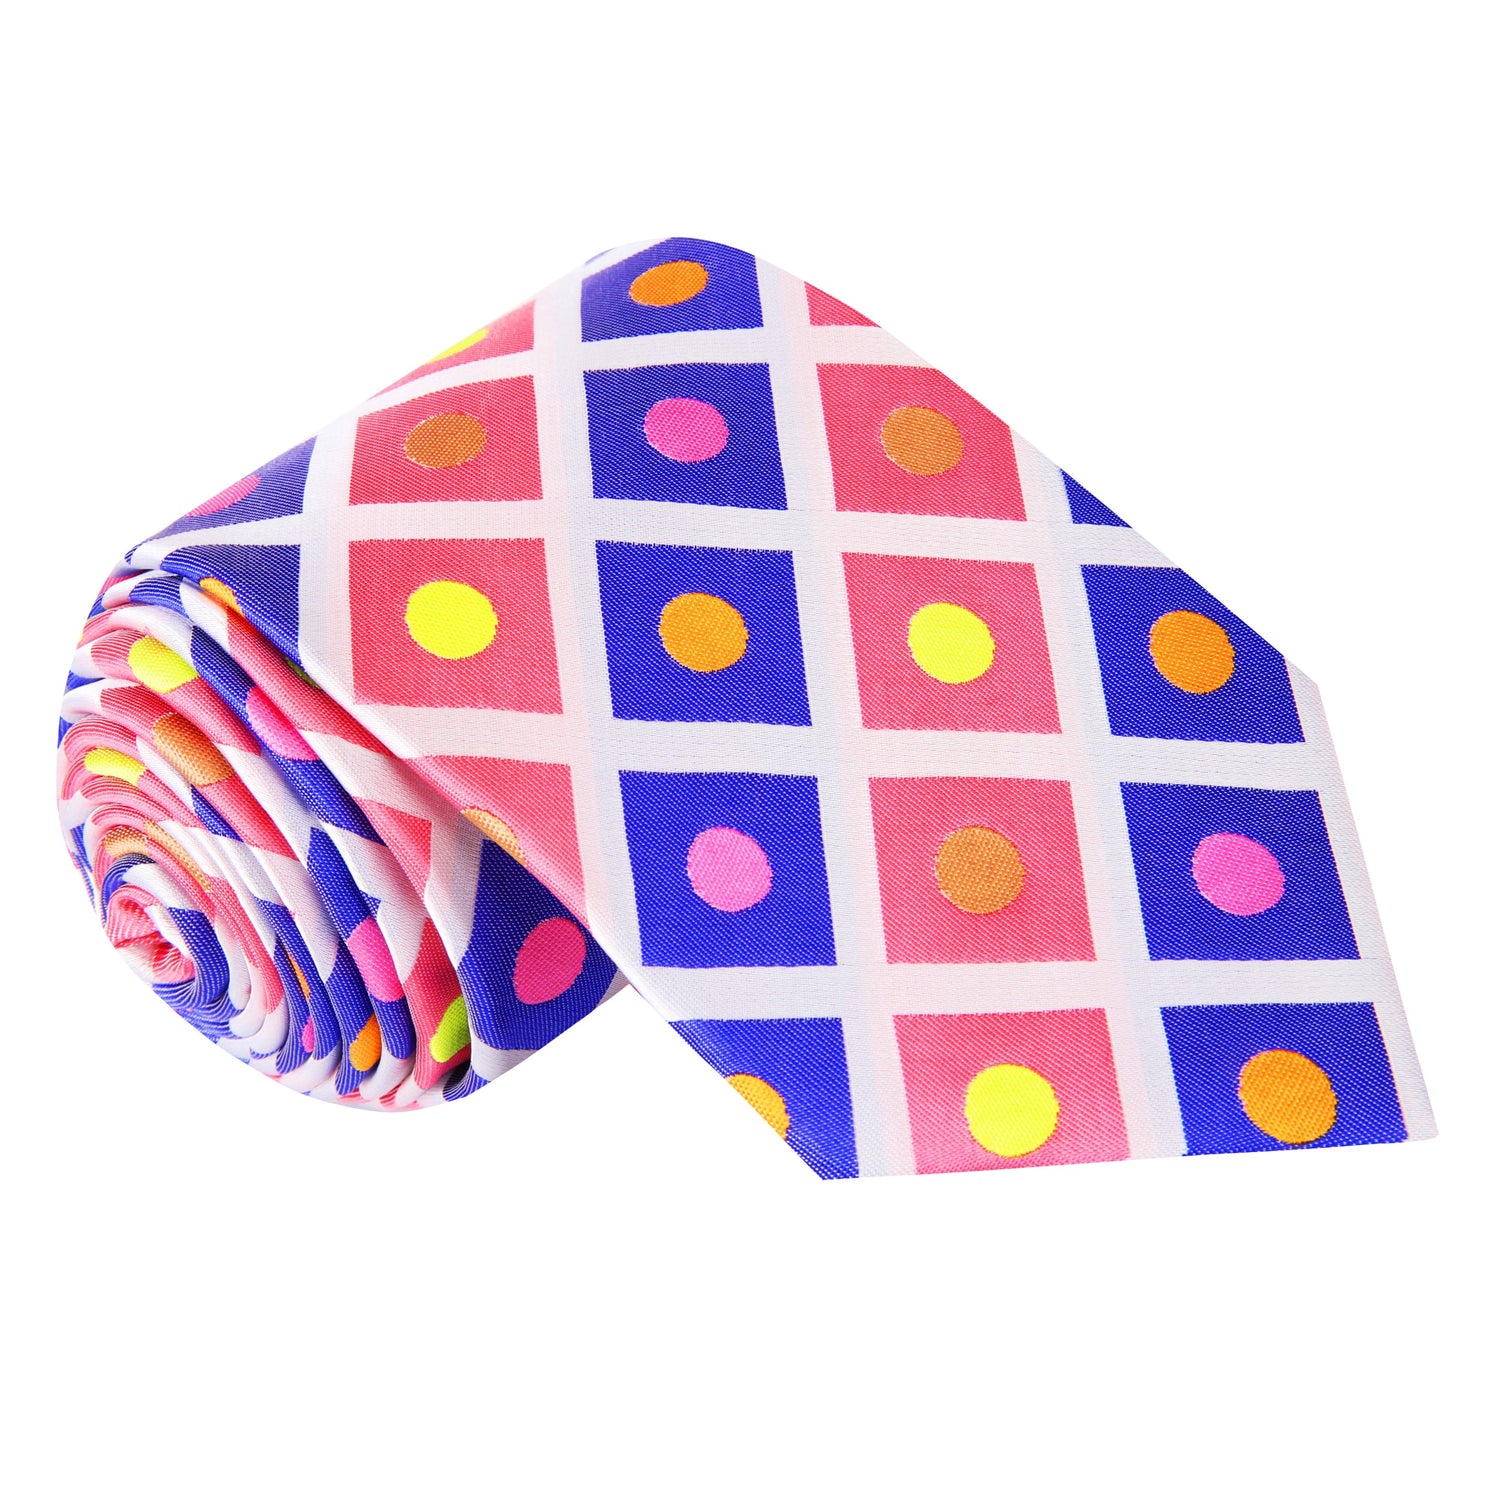 A Bright Pink, Purple, Yellow Geometric Silk Necktie